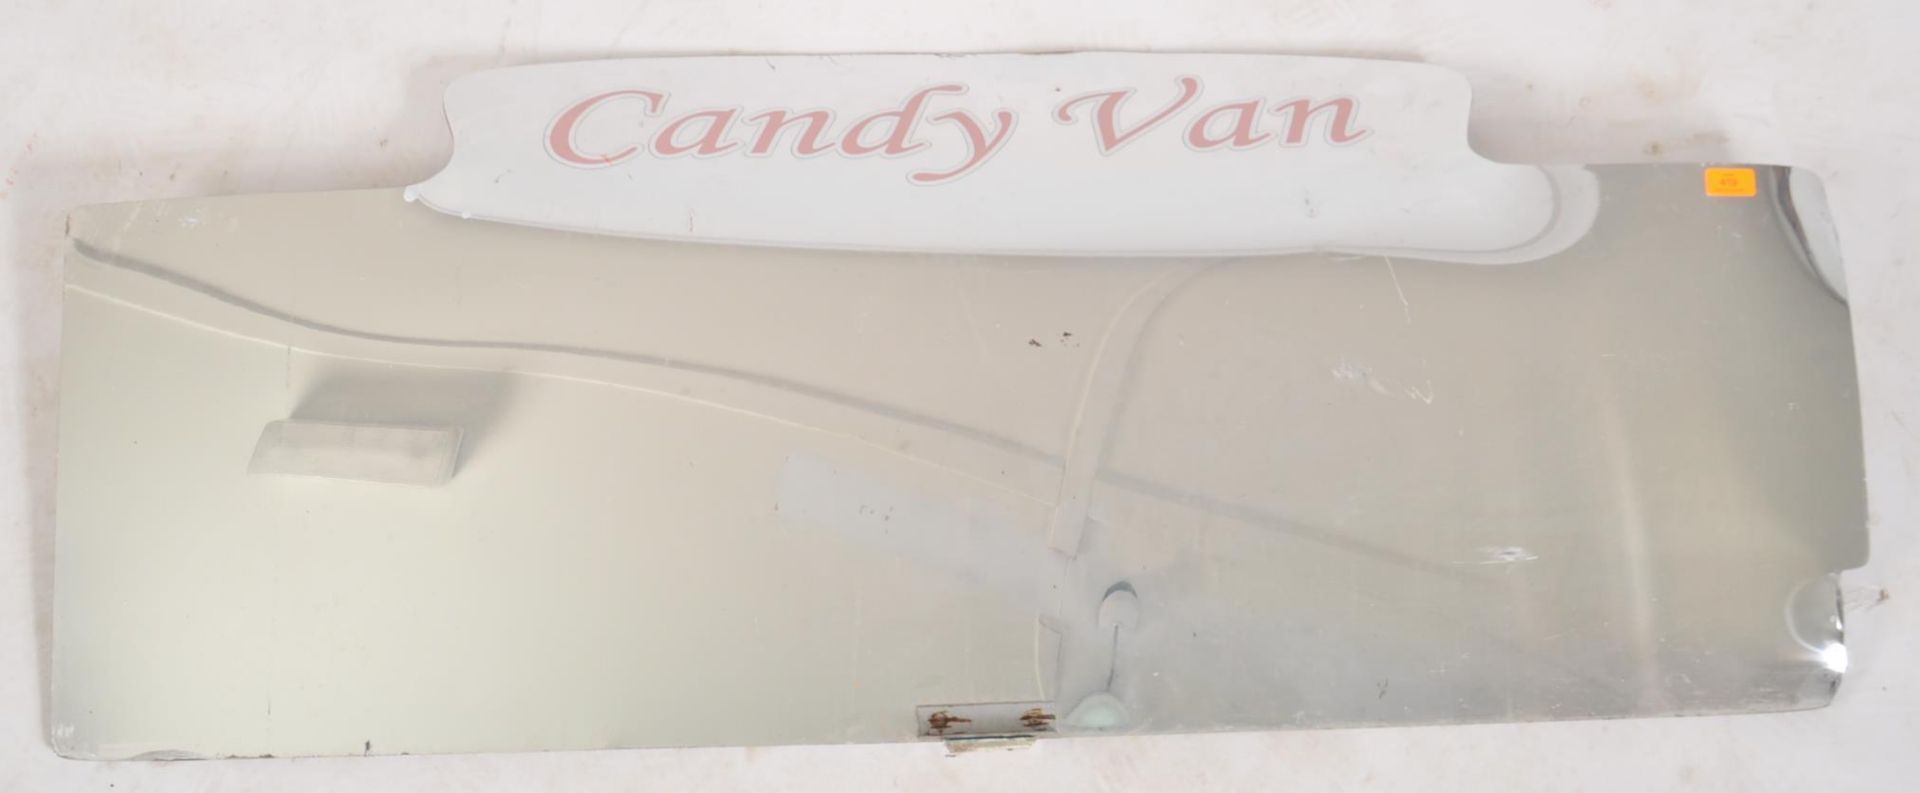 CANDY VAN - FAIRGROUND / FUNFAIR REFLECTIVE PANEL